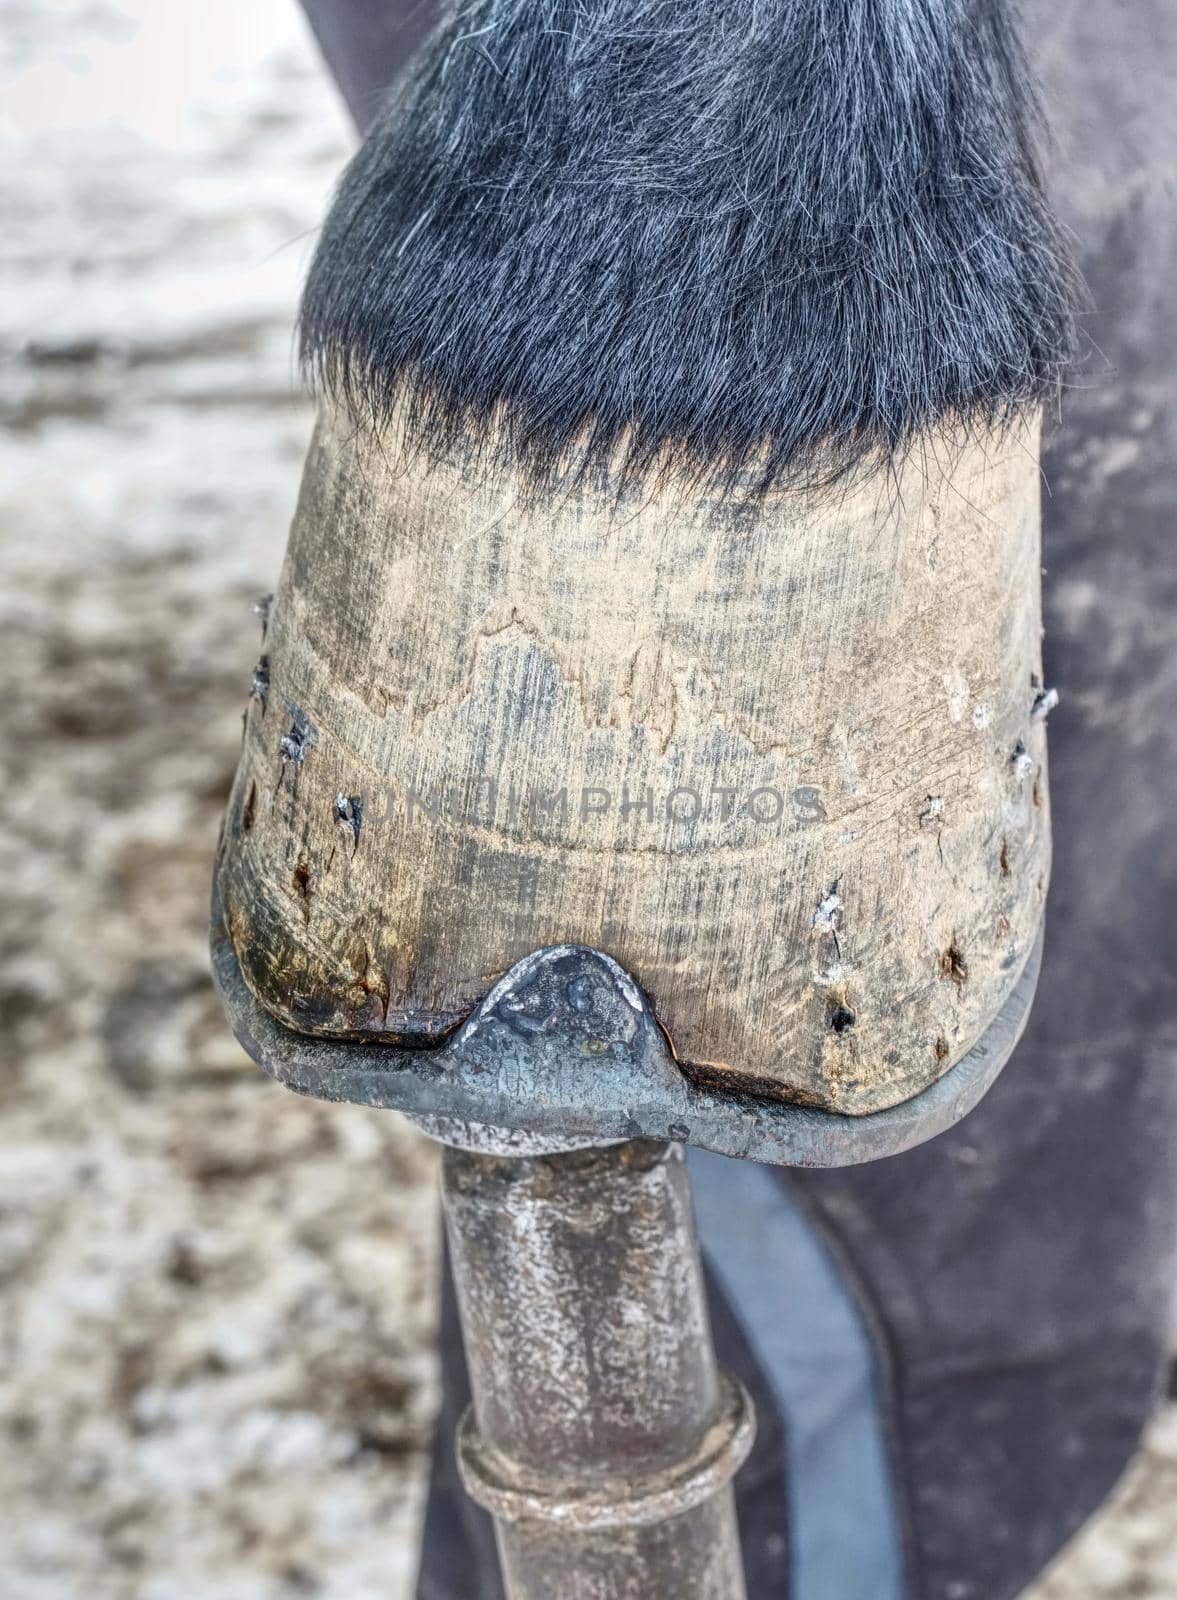 Blacksmith cut of long spiky ends of steel nail in horse hoof  by rdonar2